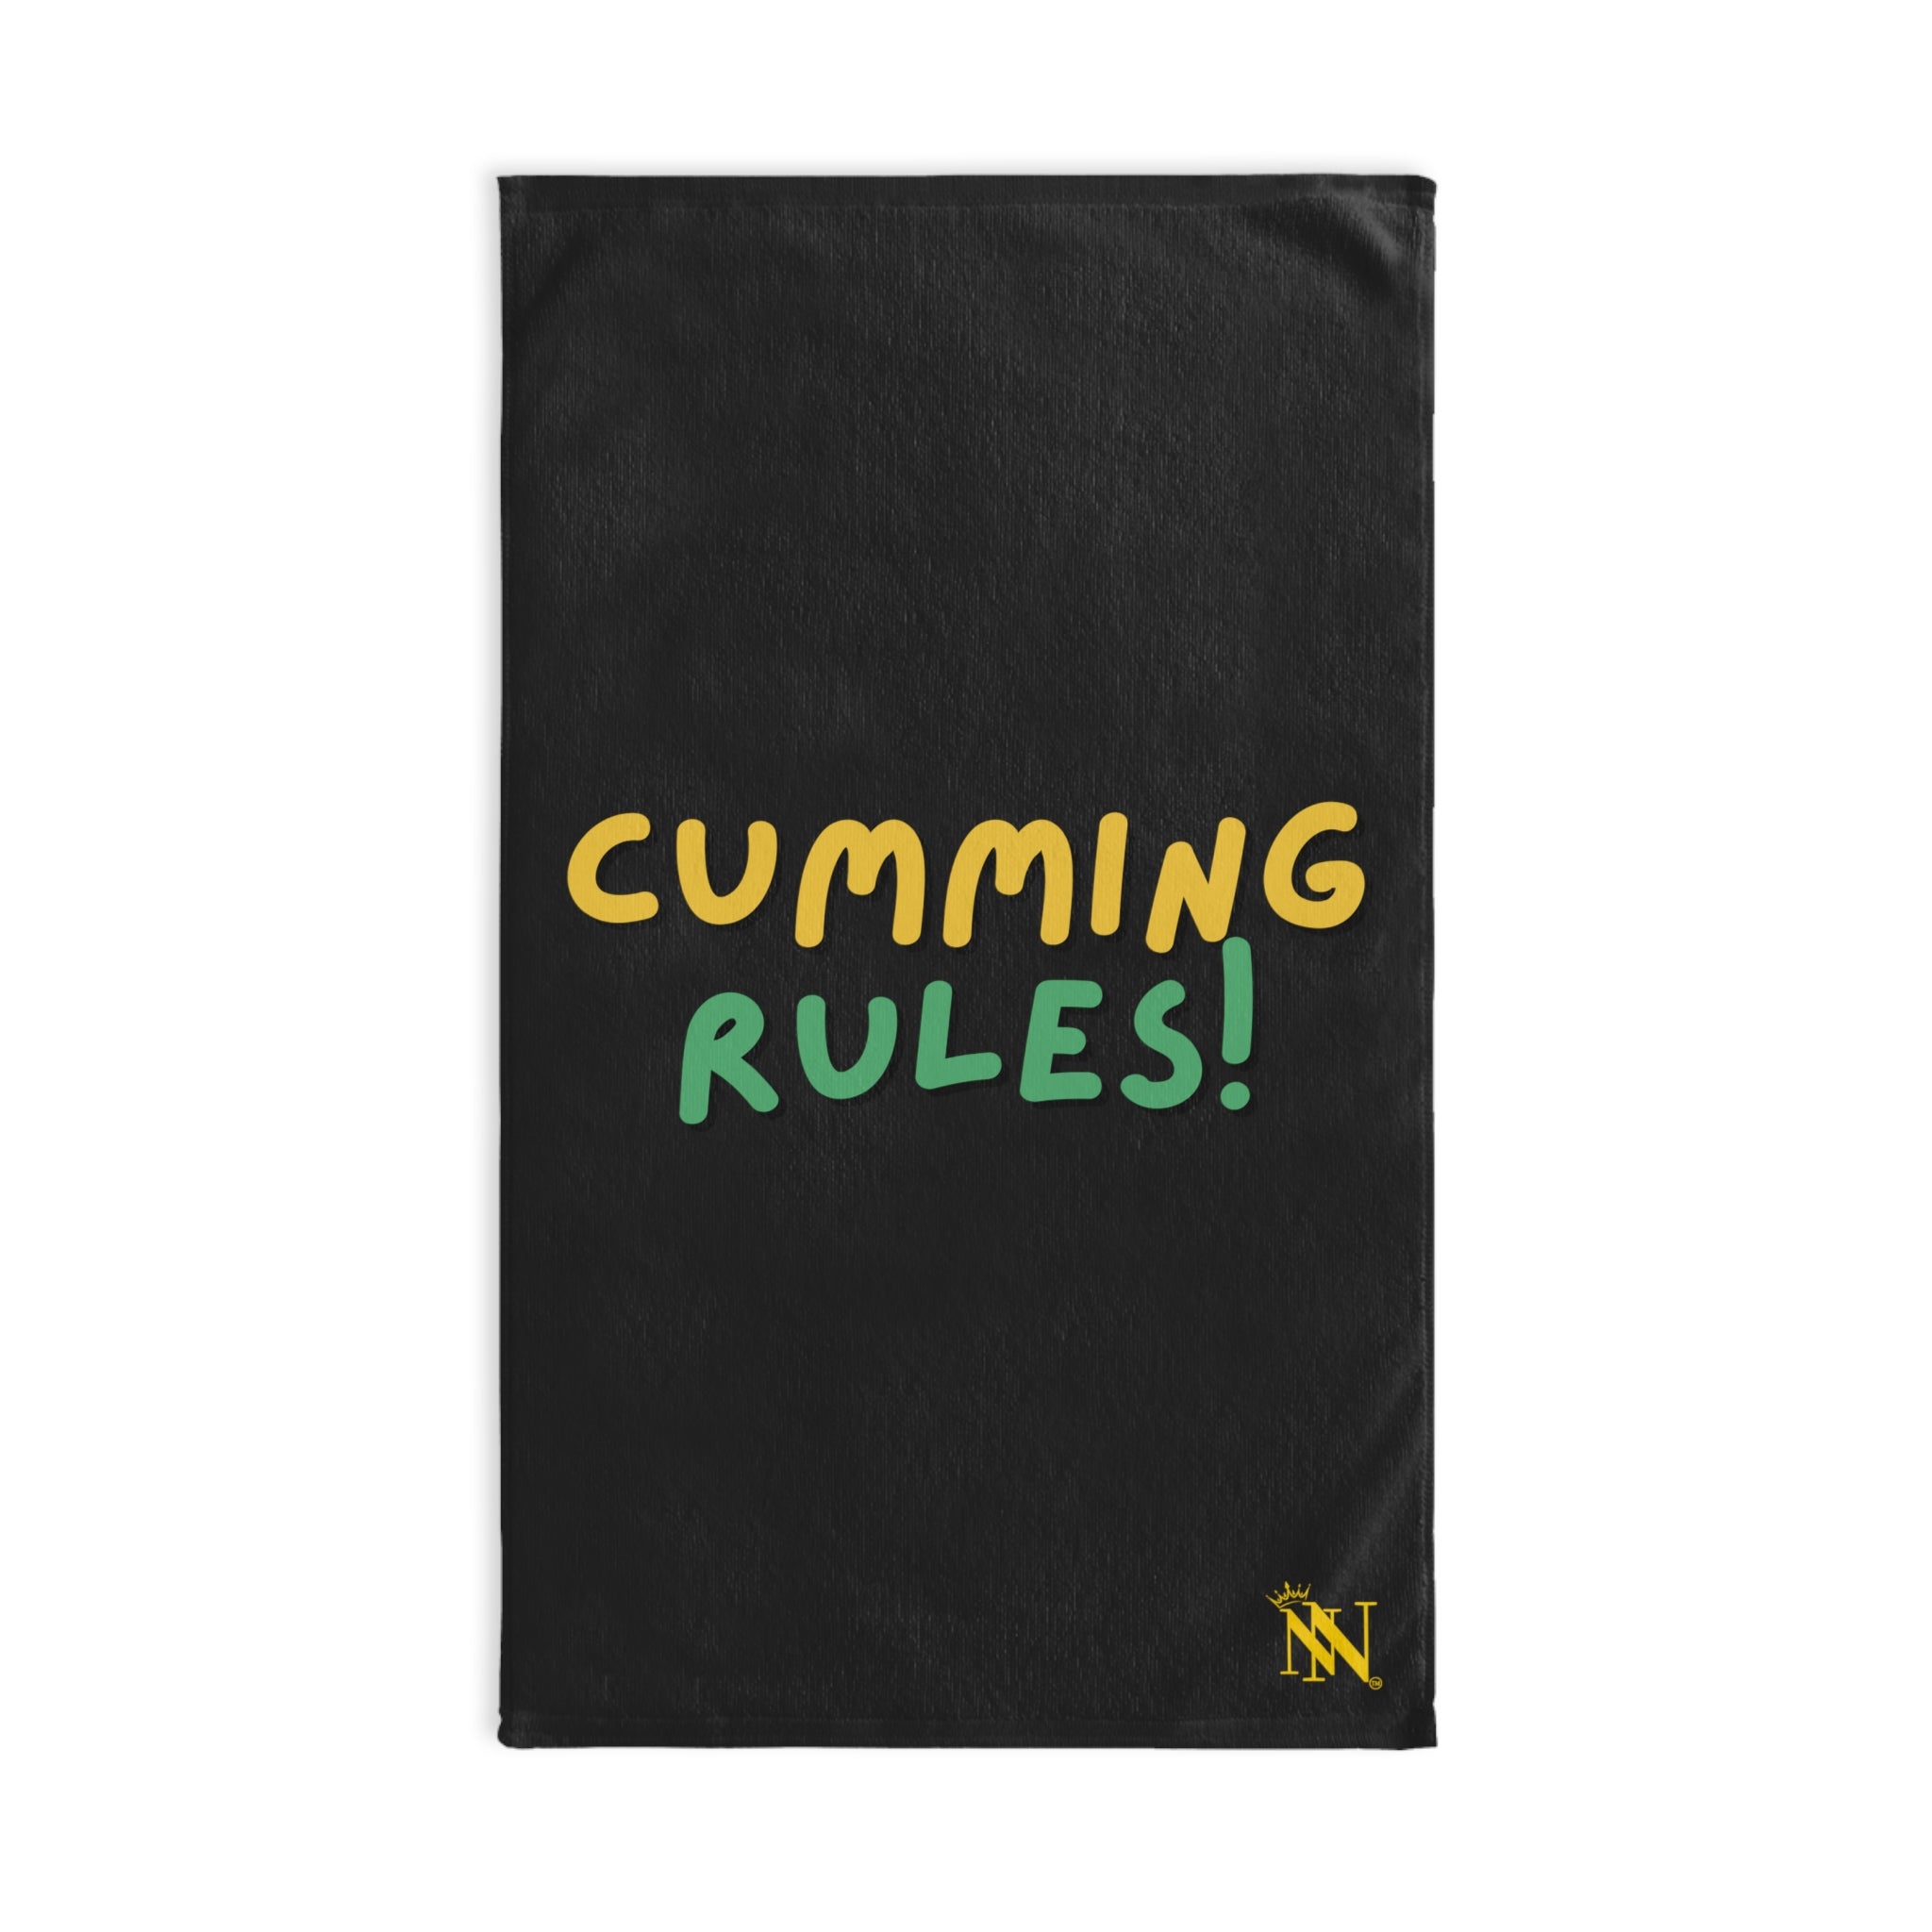 Cumming rules sex towel